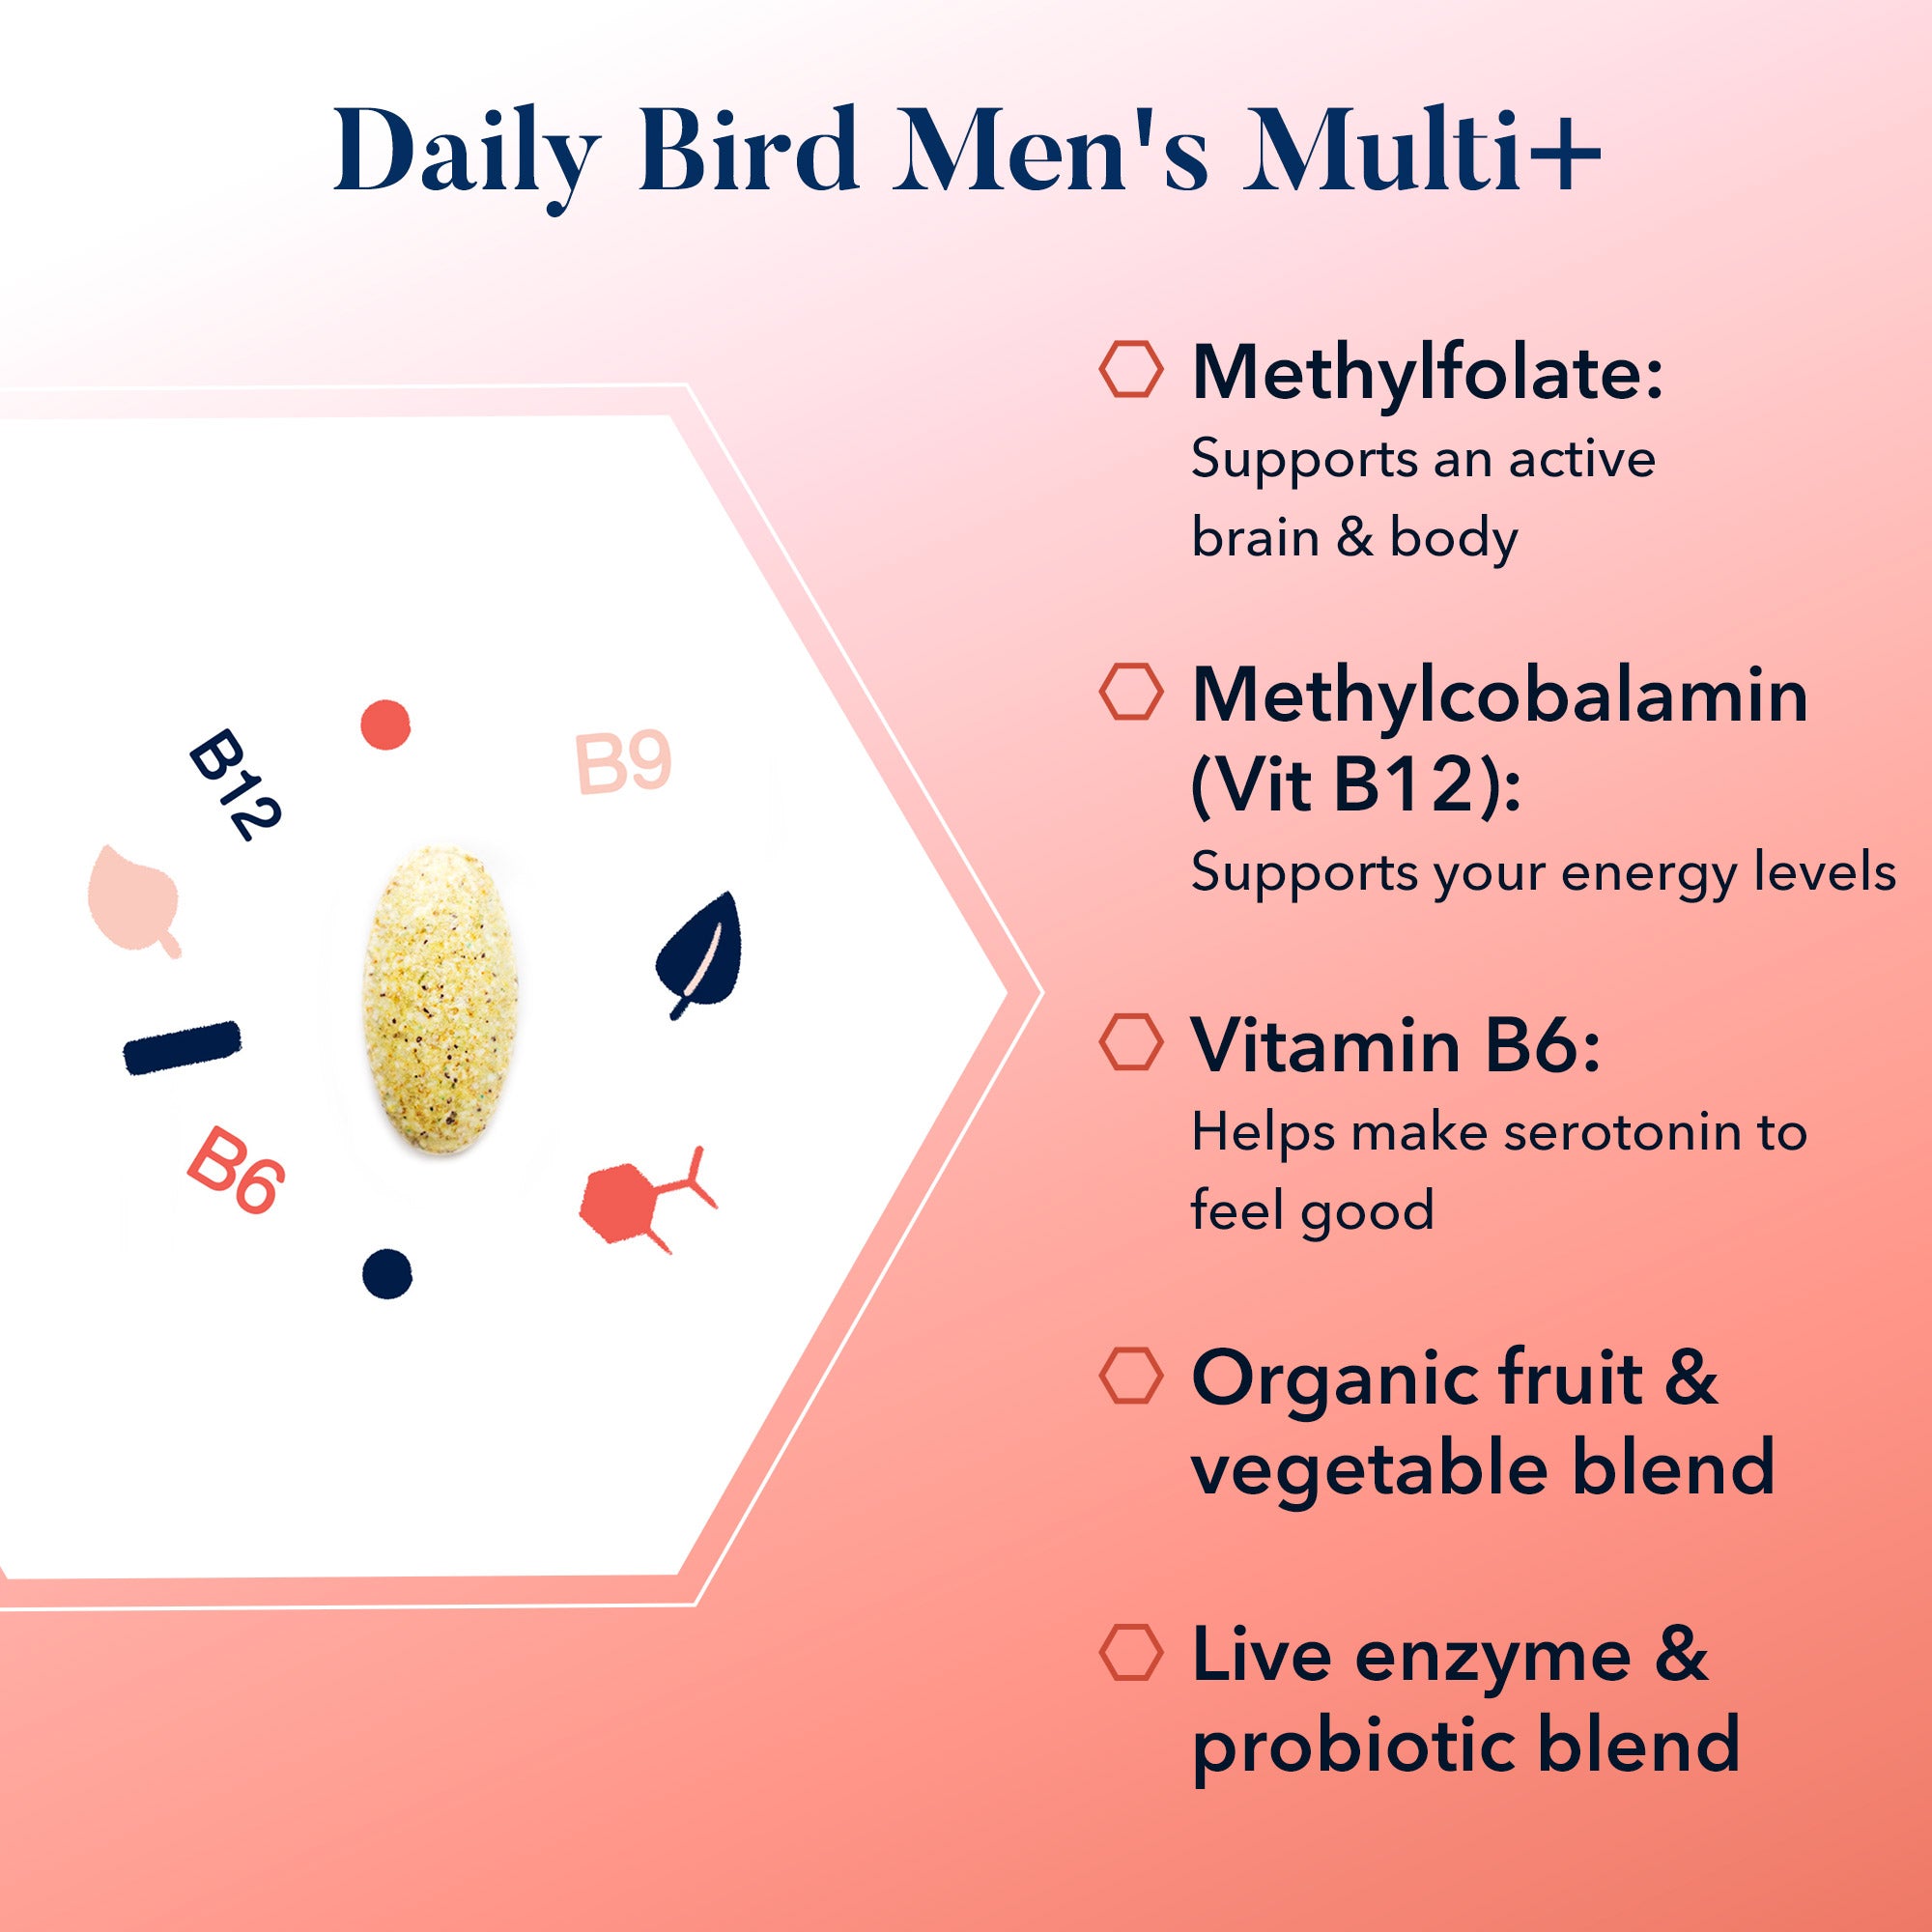 Daily Bird Men's Multi+